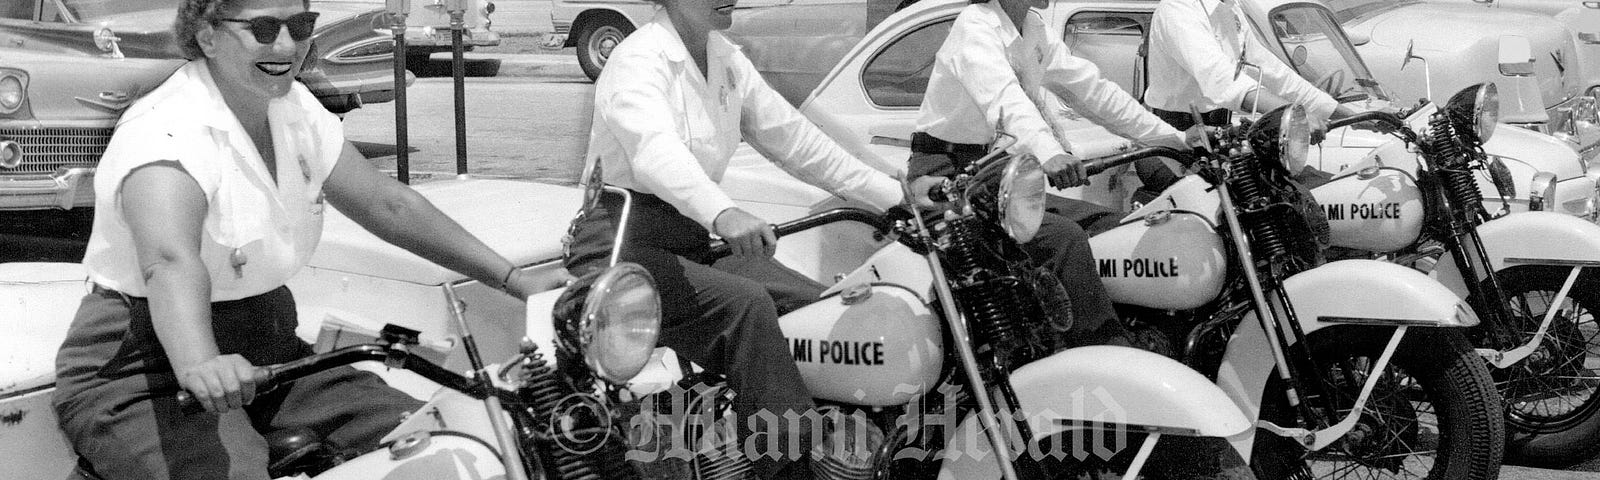 1960 Meter Maids on Harley-Davidson Servi Cars Jerry Roth